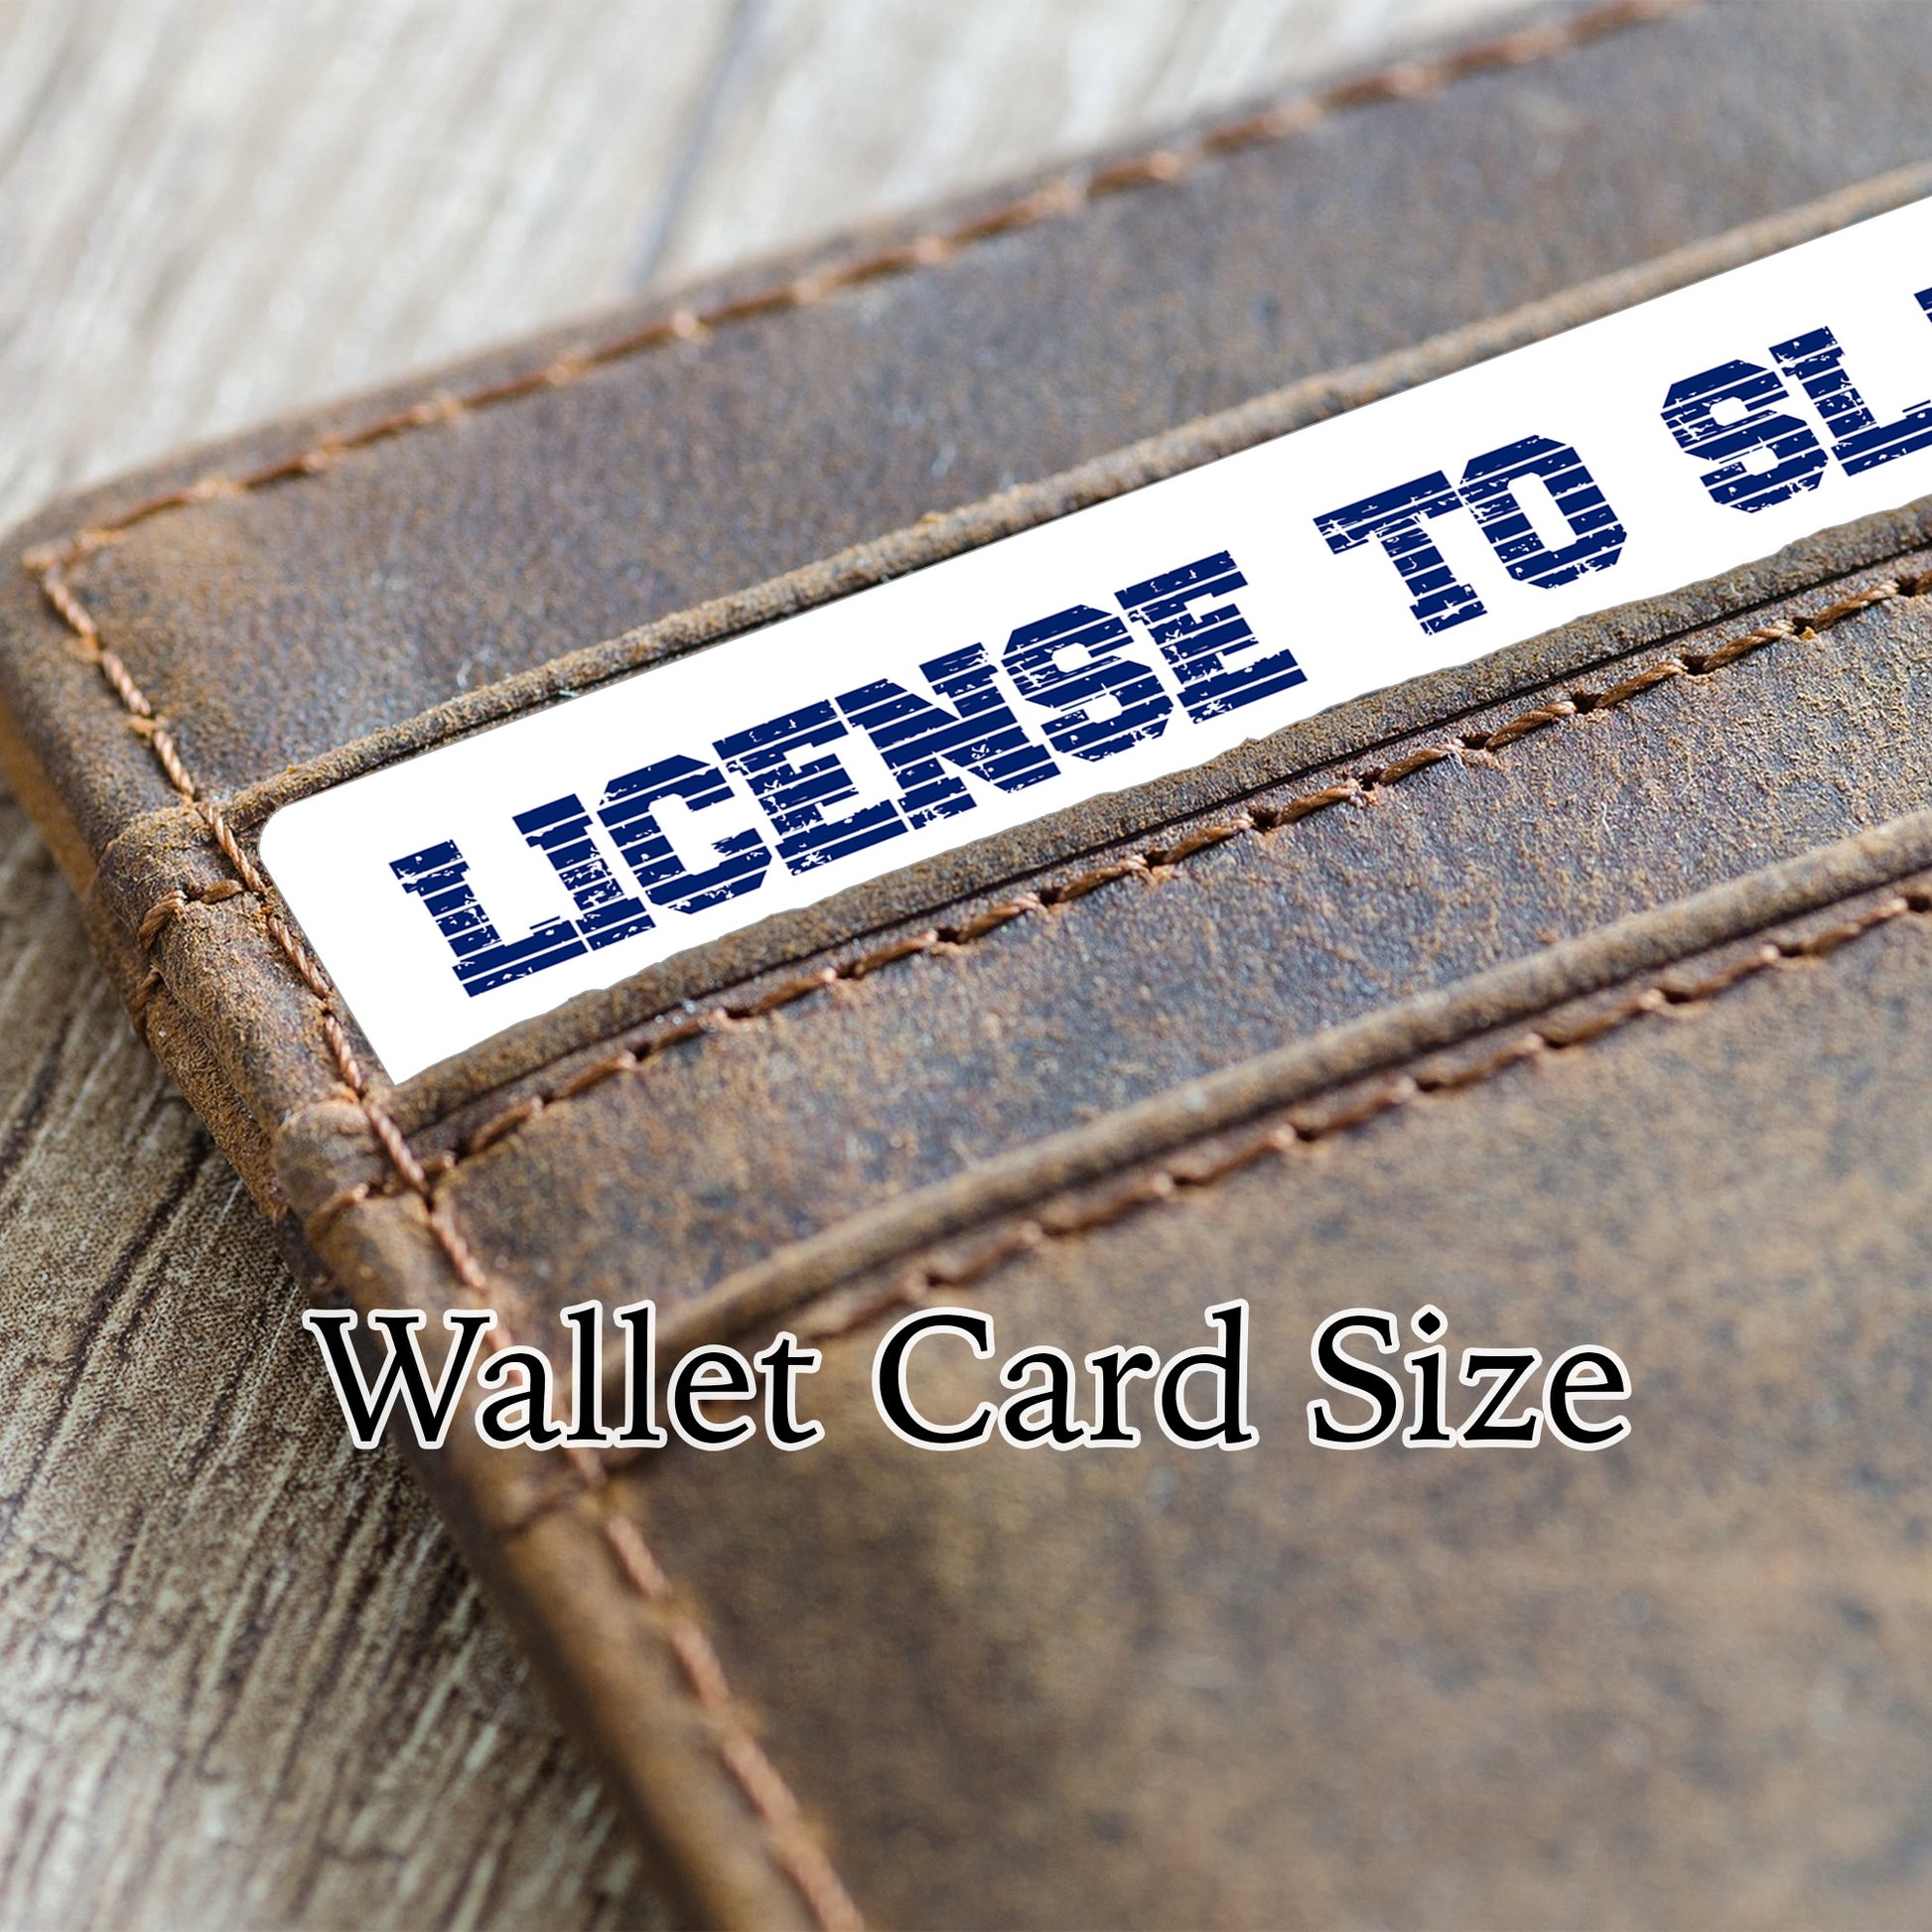 Pansexual pride personalised license to slay card